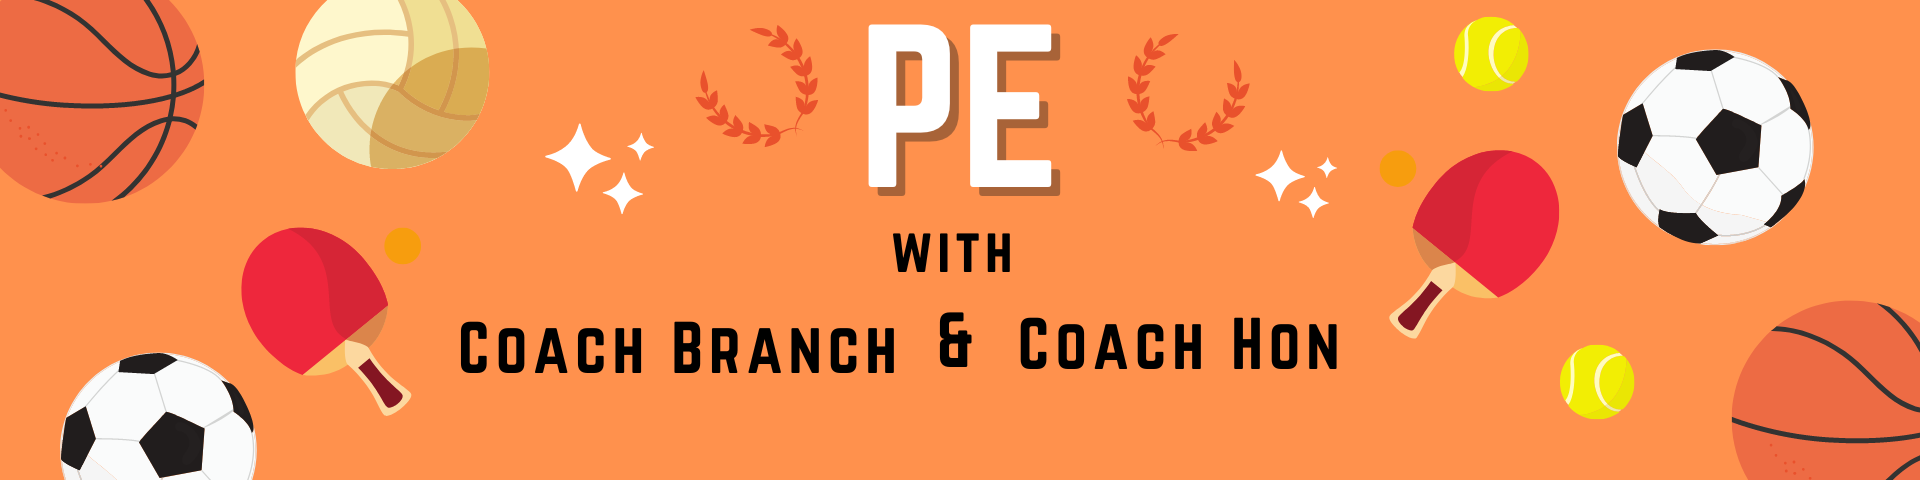 PE with Coach Branch & Coach Hon